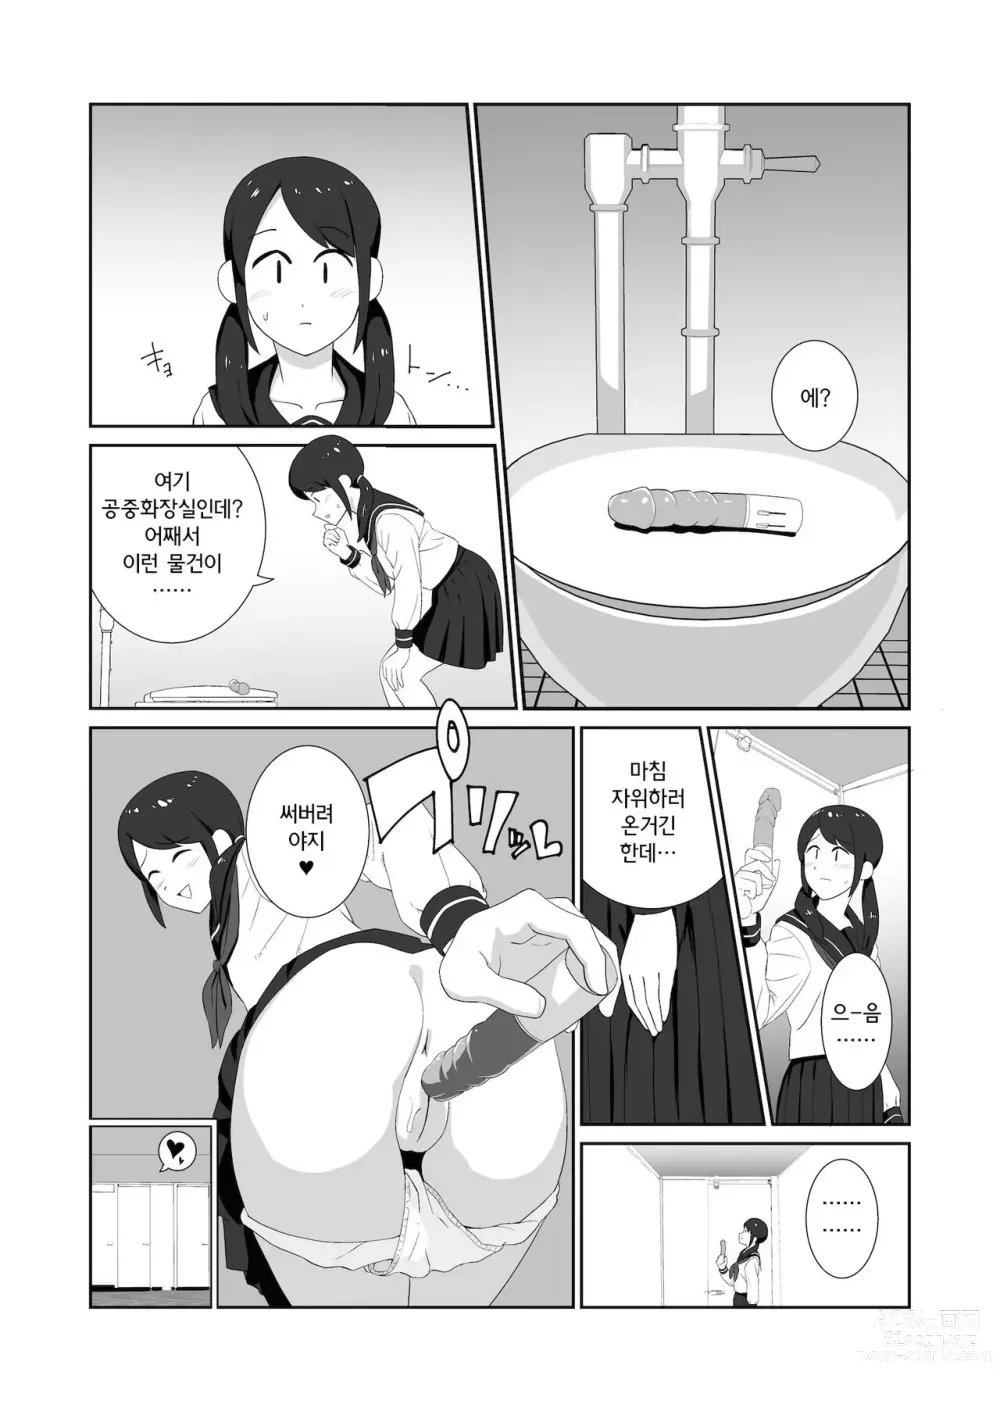 Page 2 of manga 공중화장실에서 도촬당하며 자위하는것에 빠져버린 여자